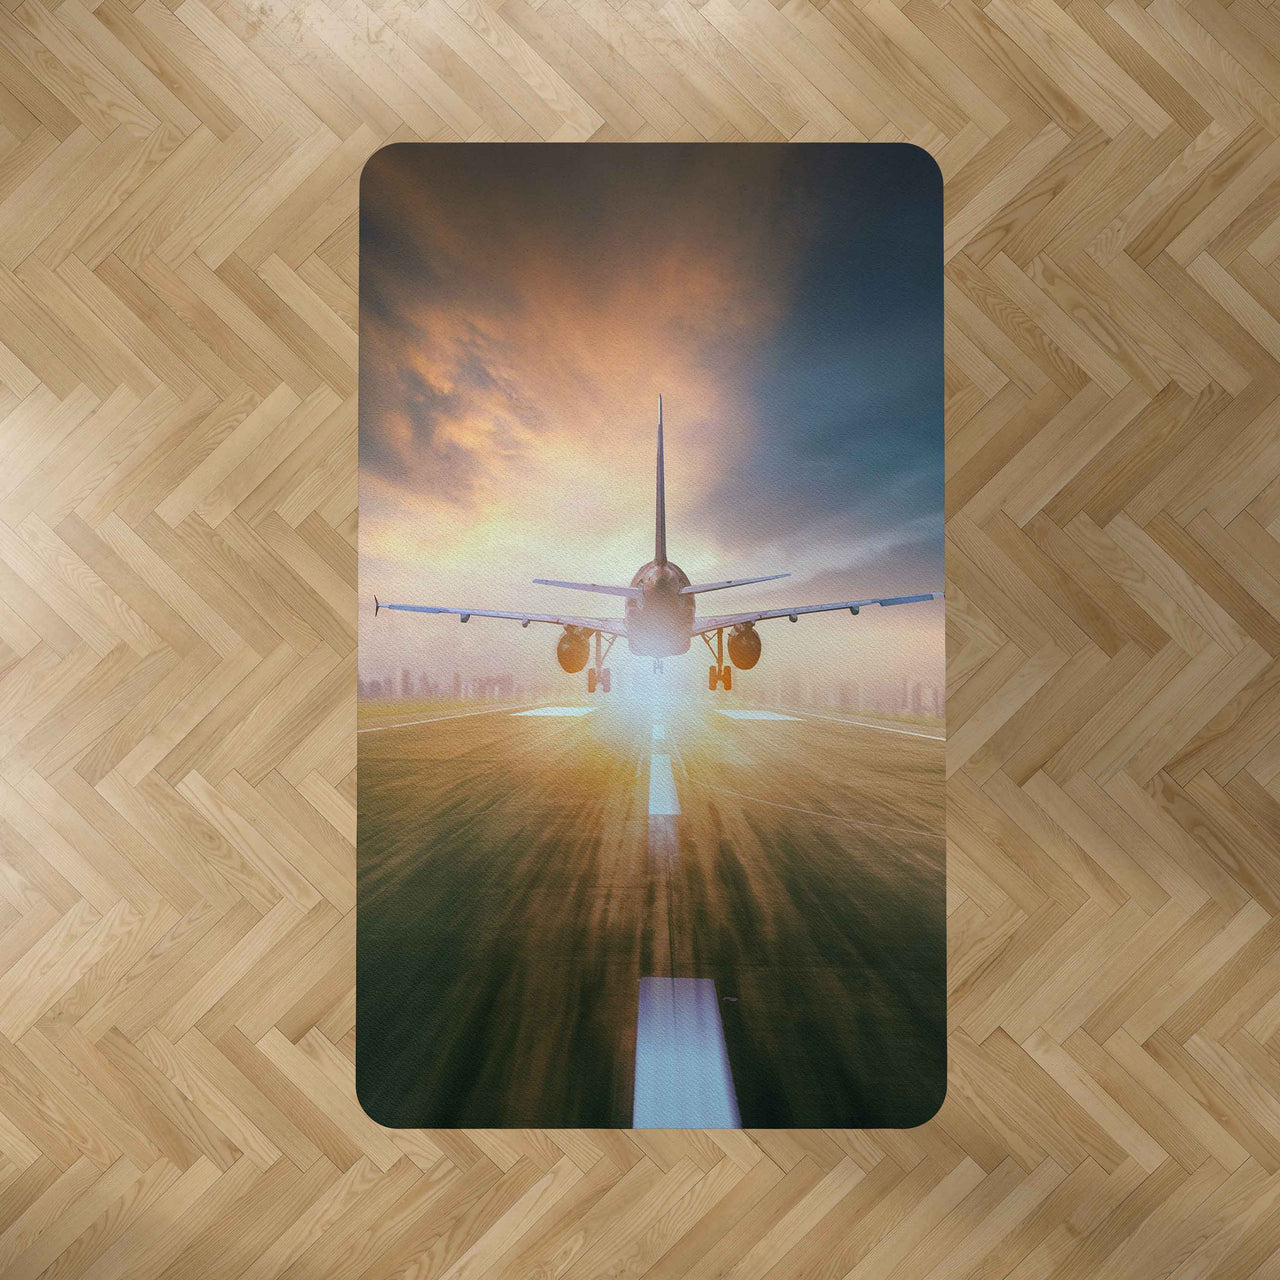 Airplane Flying Over Runway Designed Carpet & Floor Mats